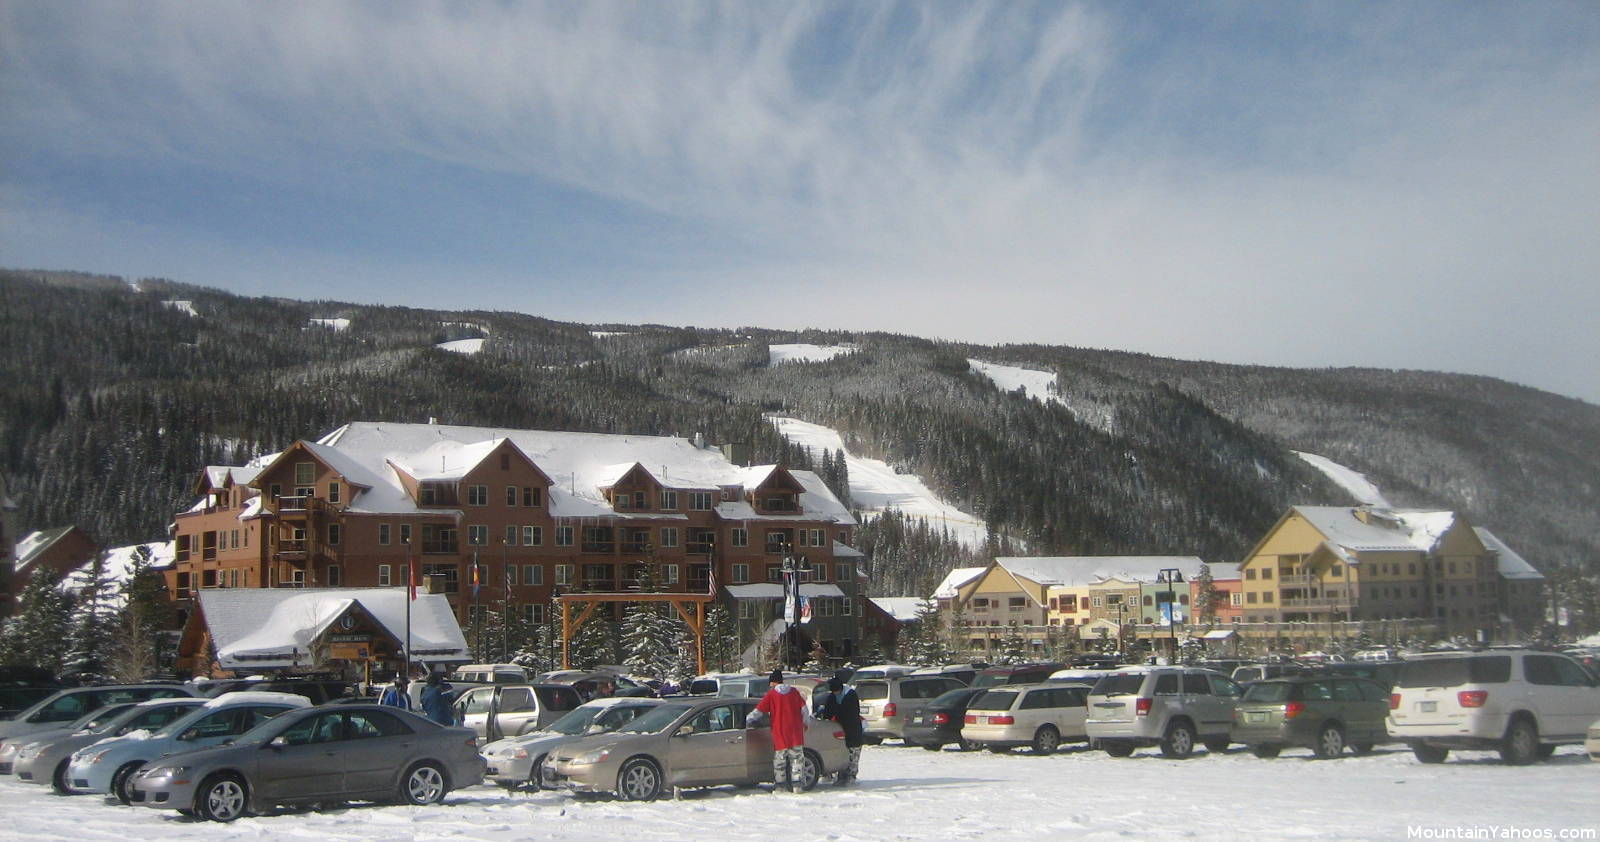 Keystone Colorado (US) Ski Resort Review and Guide